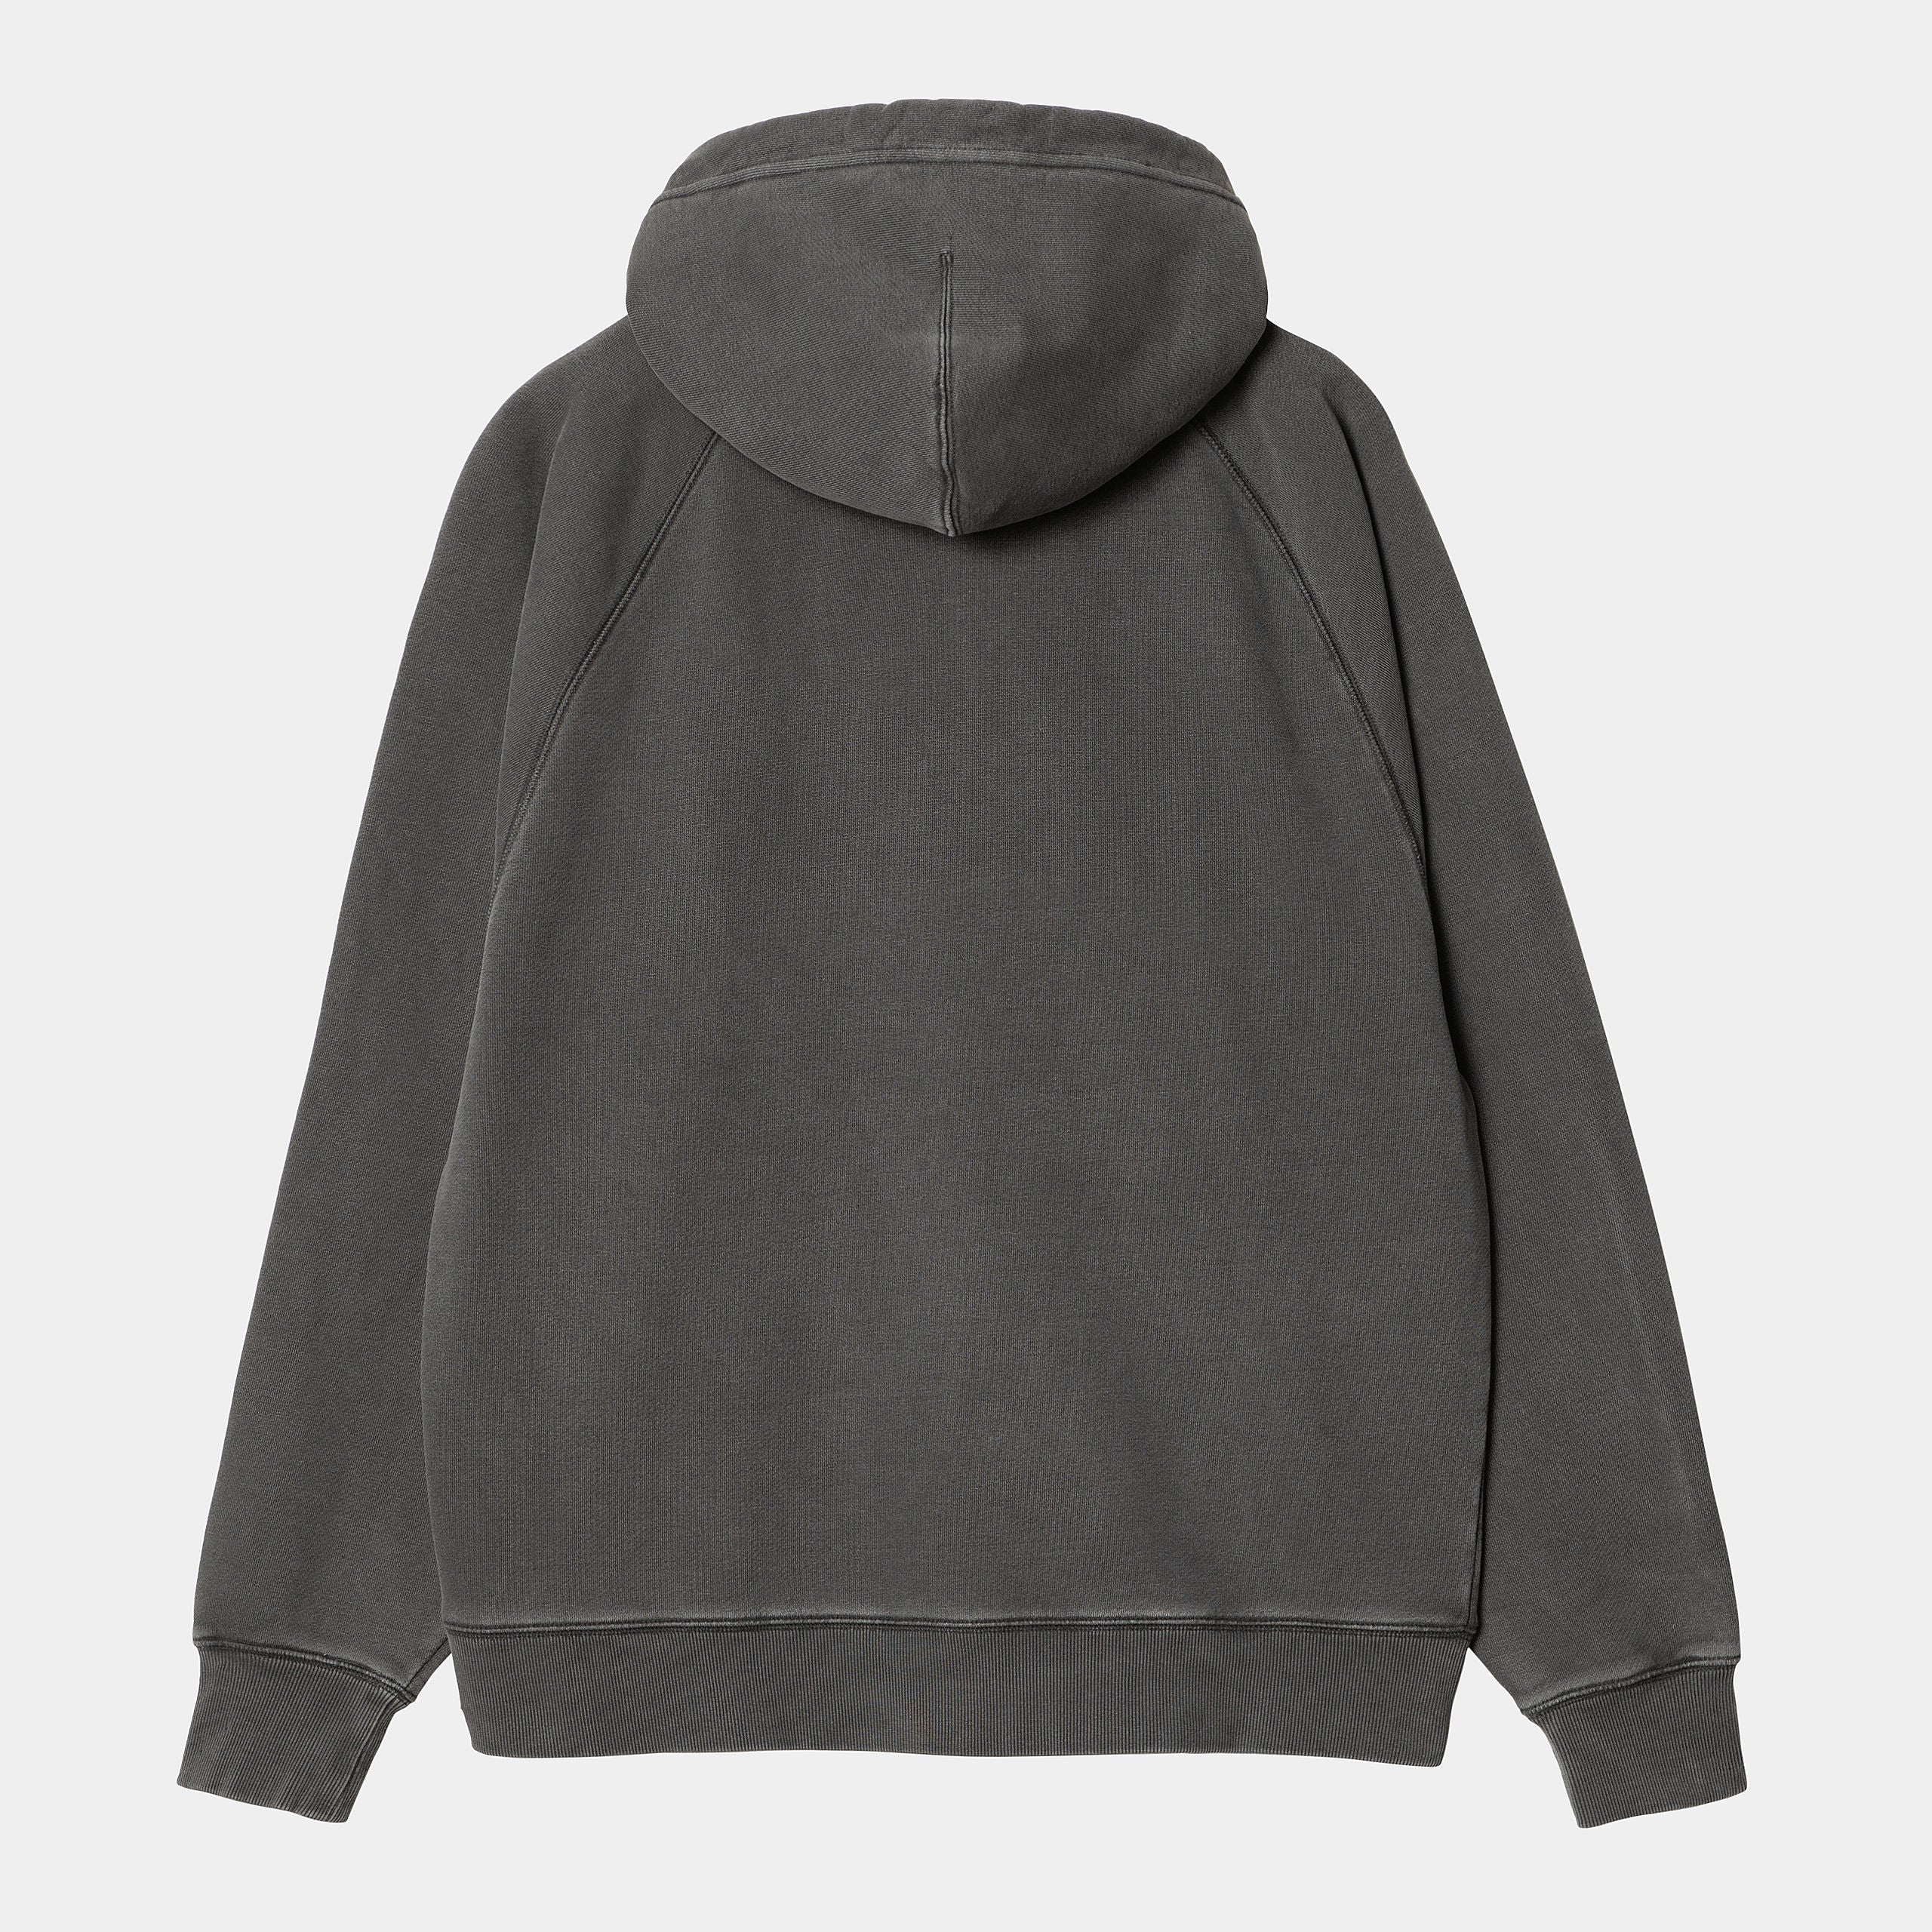 Men's Carhartt Wip Hooded Taos Jacket Cotton Sweat, 480 G/m² Flint Garment Dyed